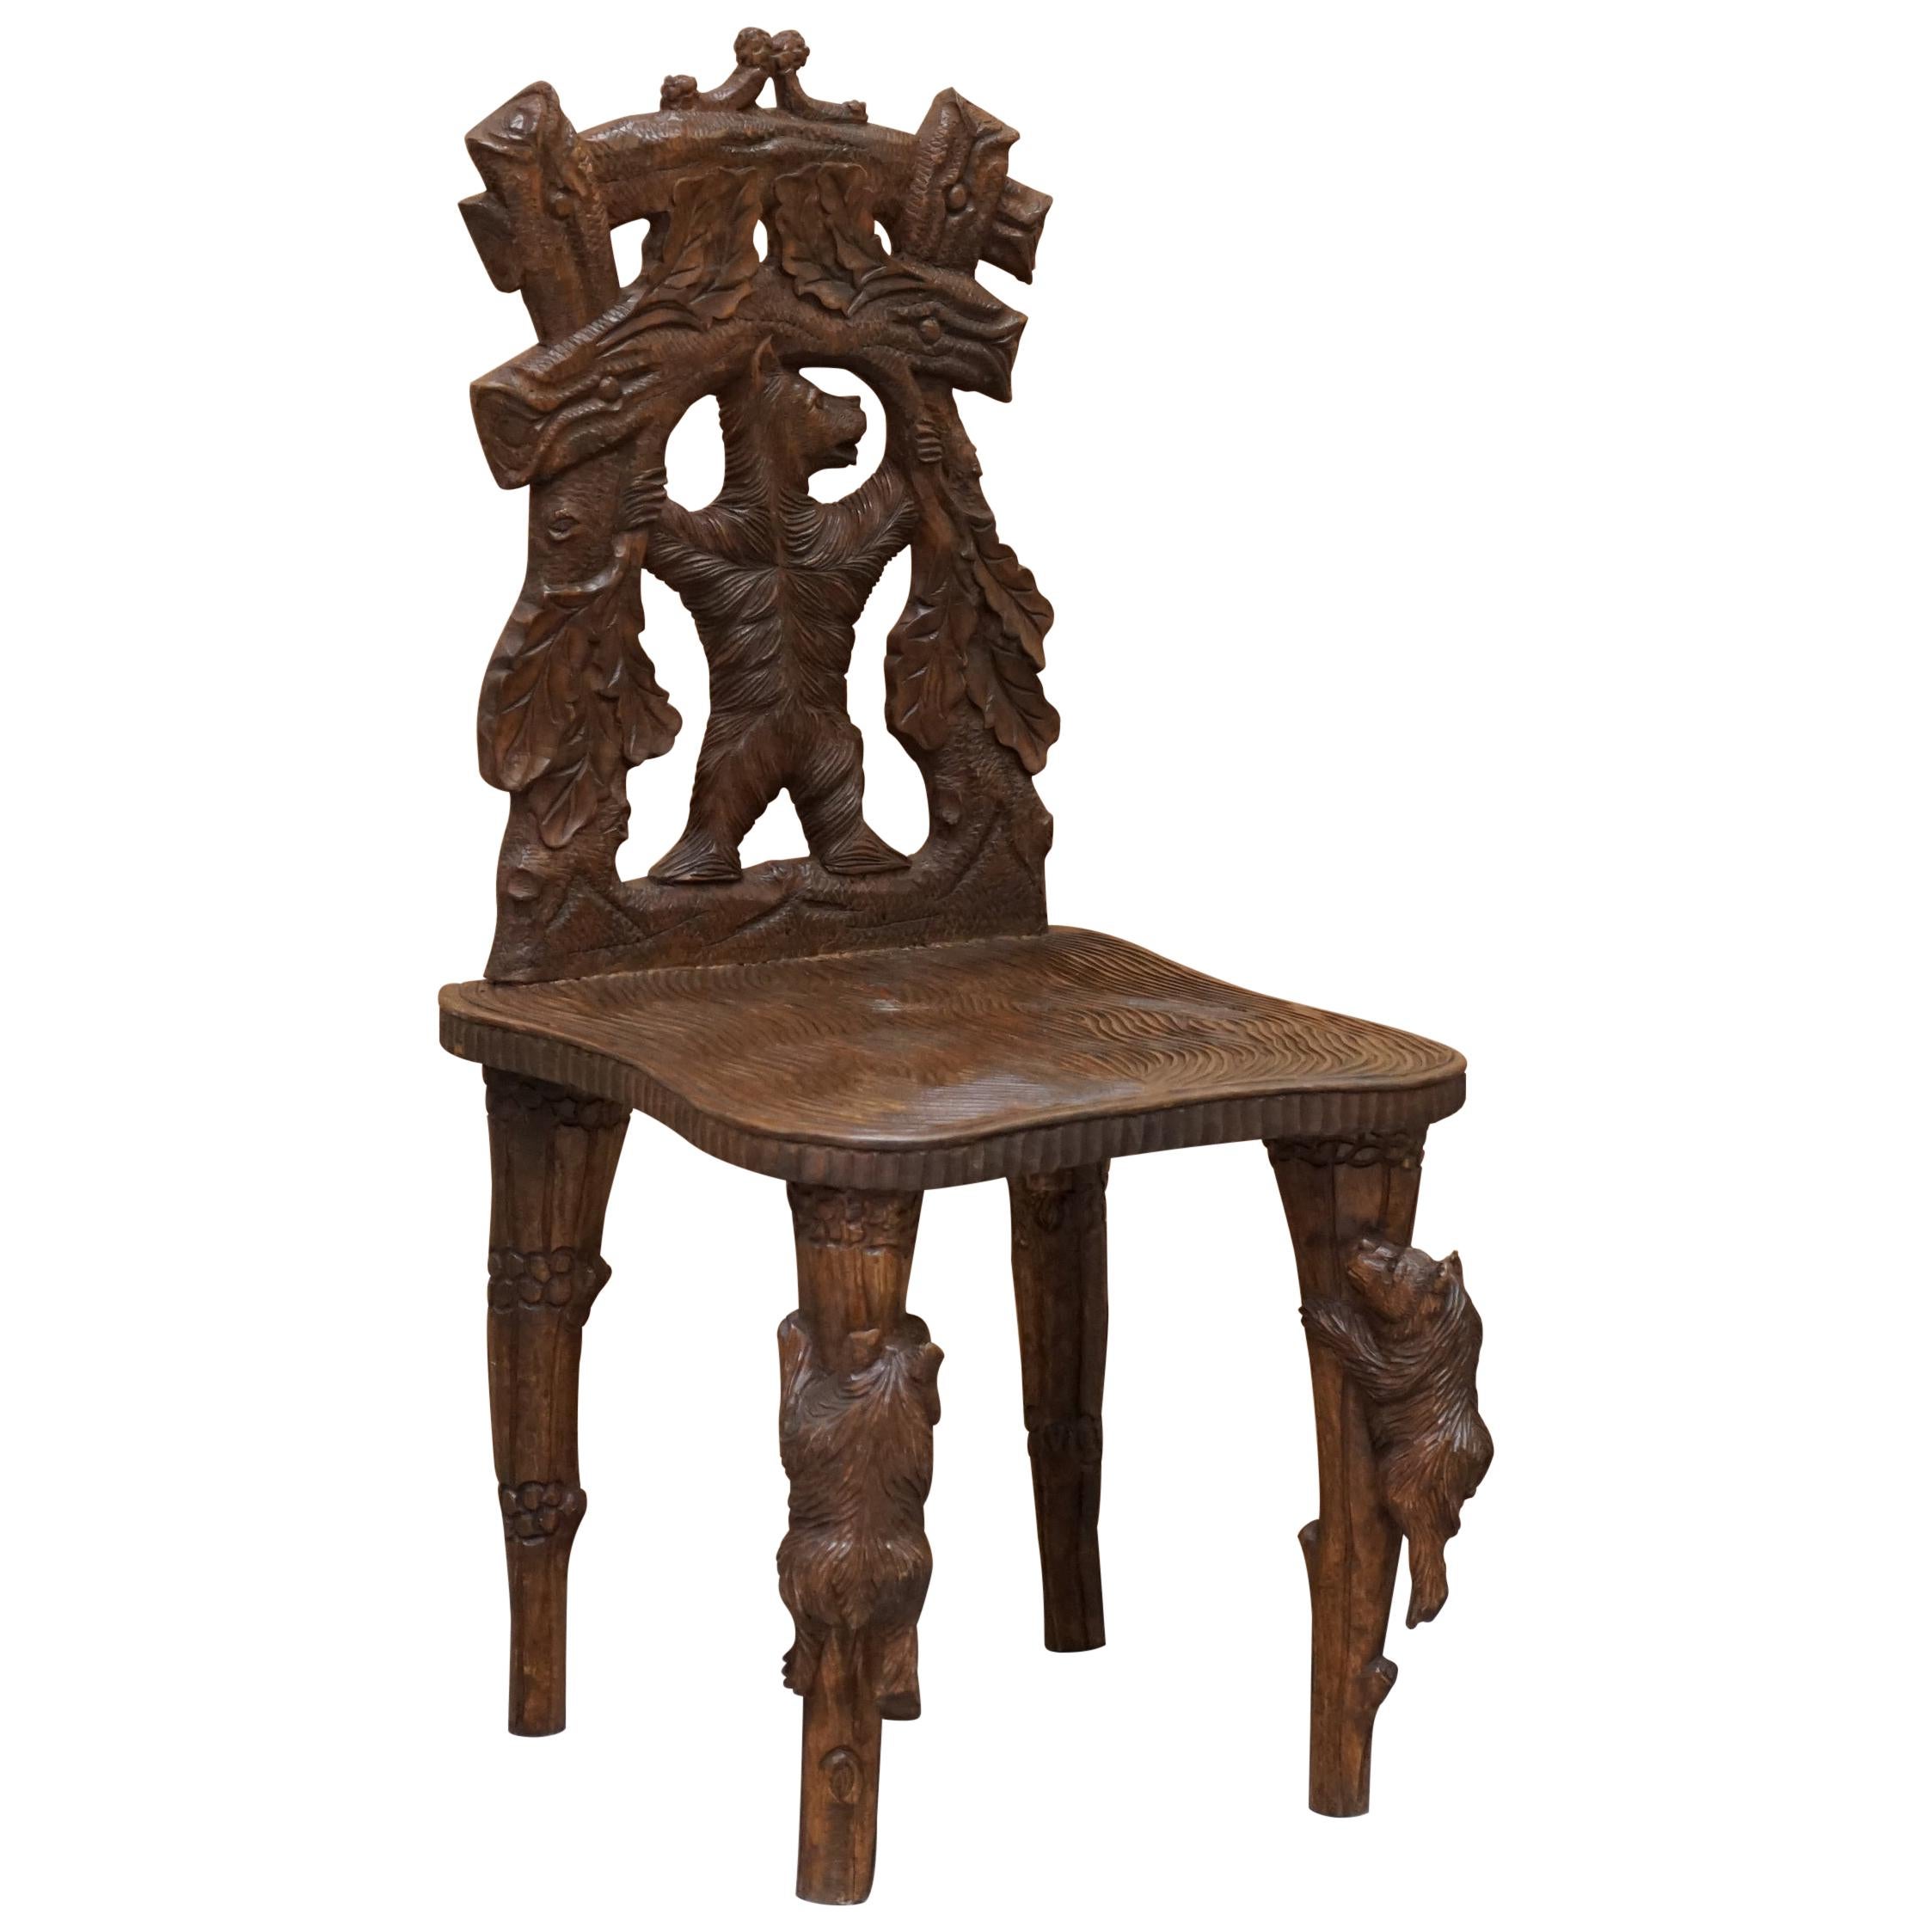 Slifka 4.5 Resin Imitation Hand-Carved Wood Rocking Chair Black Bears Figurine